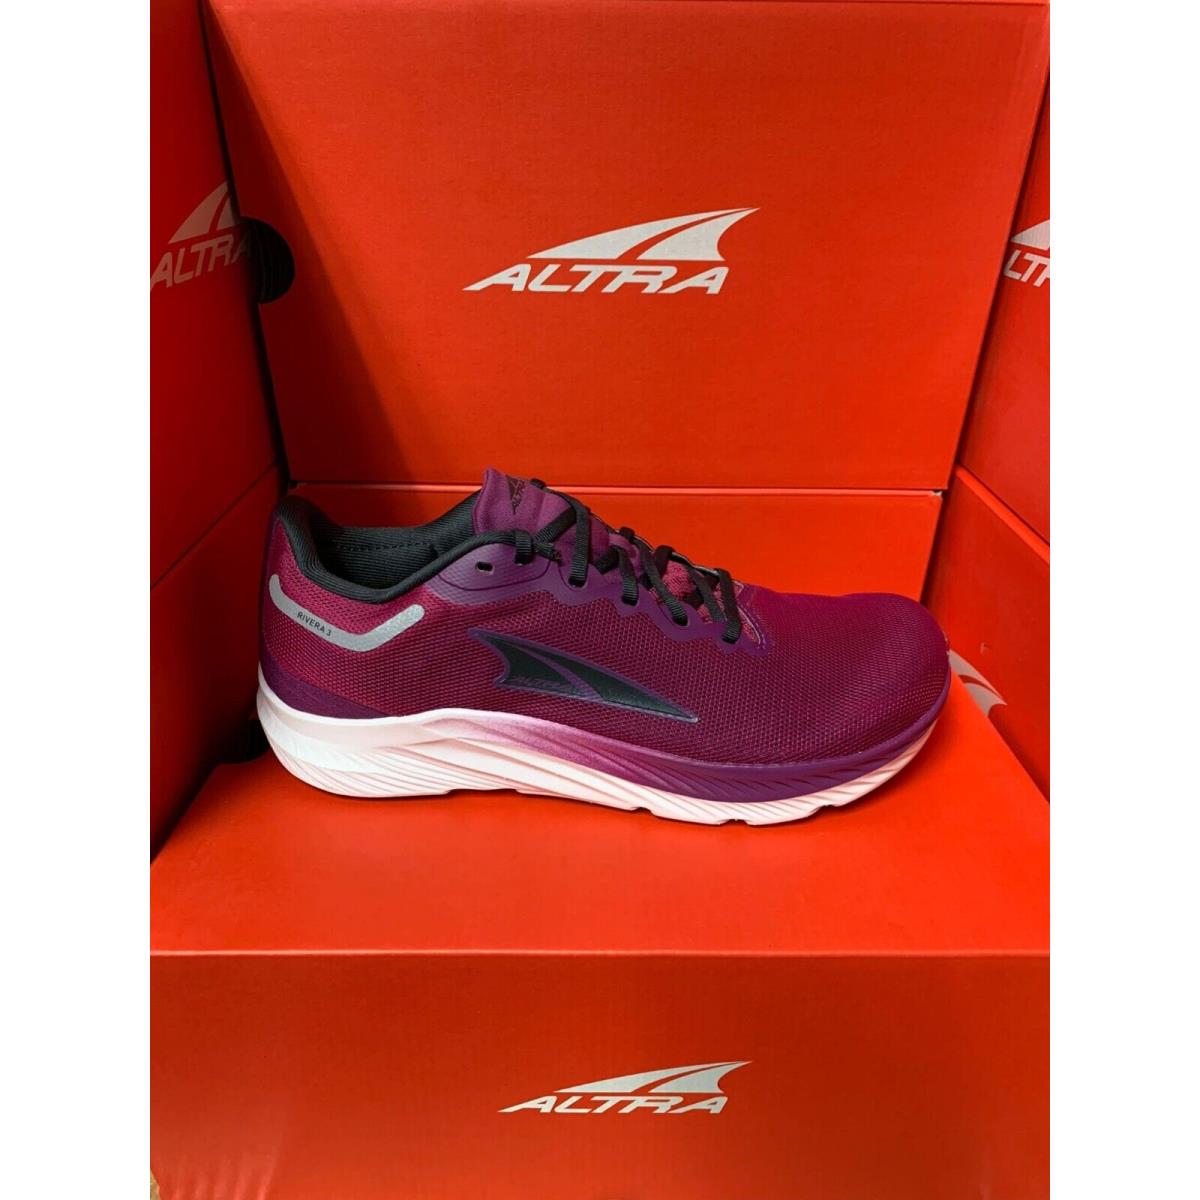 Altra Rivera 3 Black/purple Road Running Shoes For Women AL0A7R7N0501